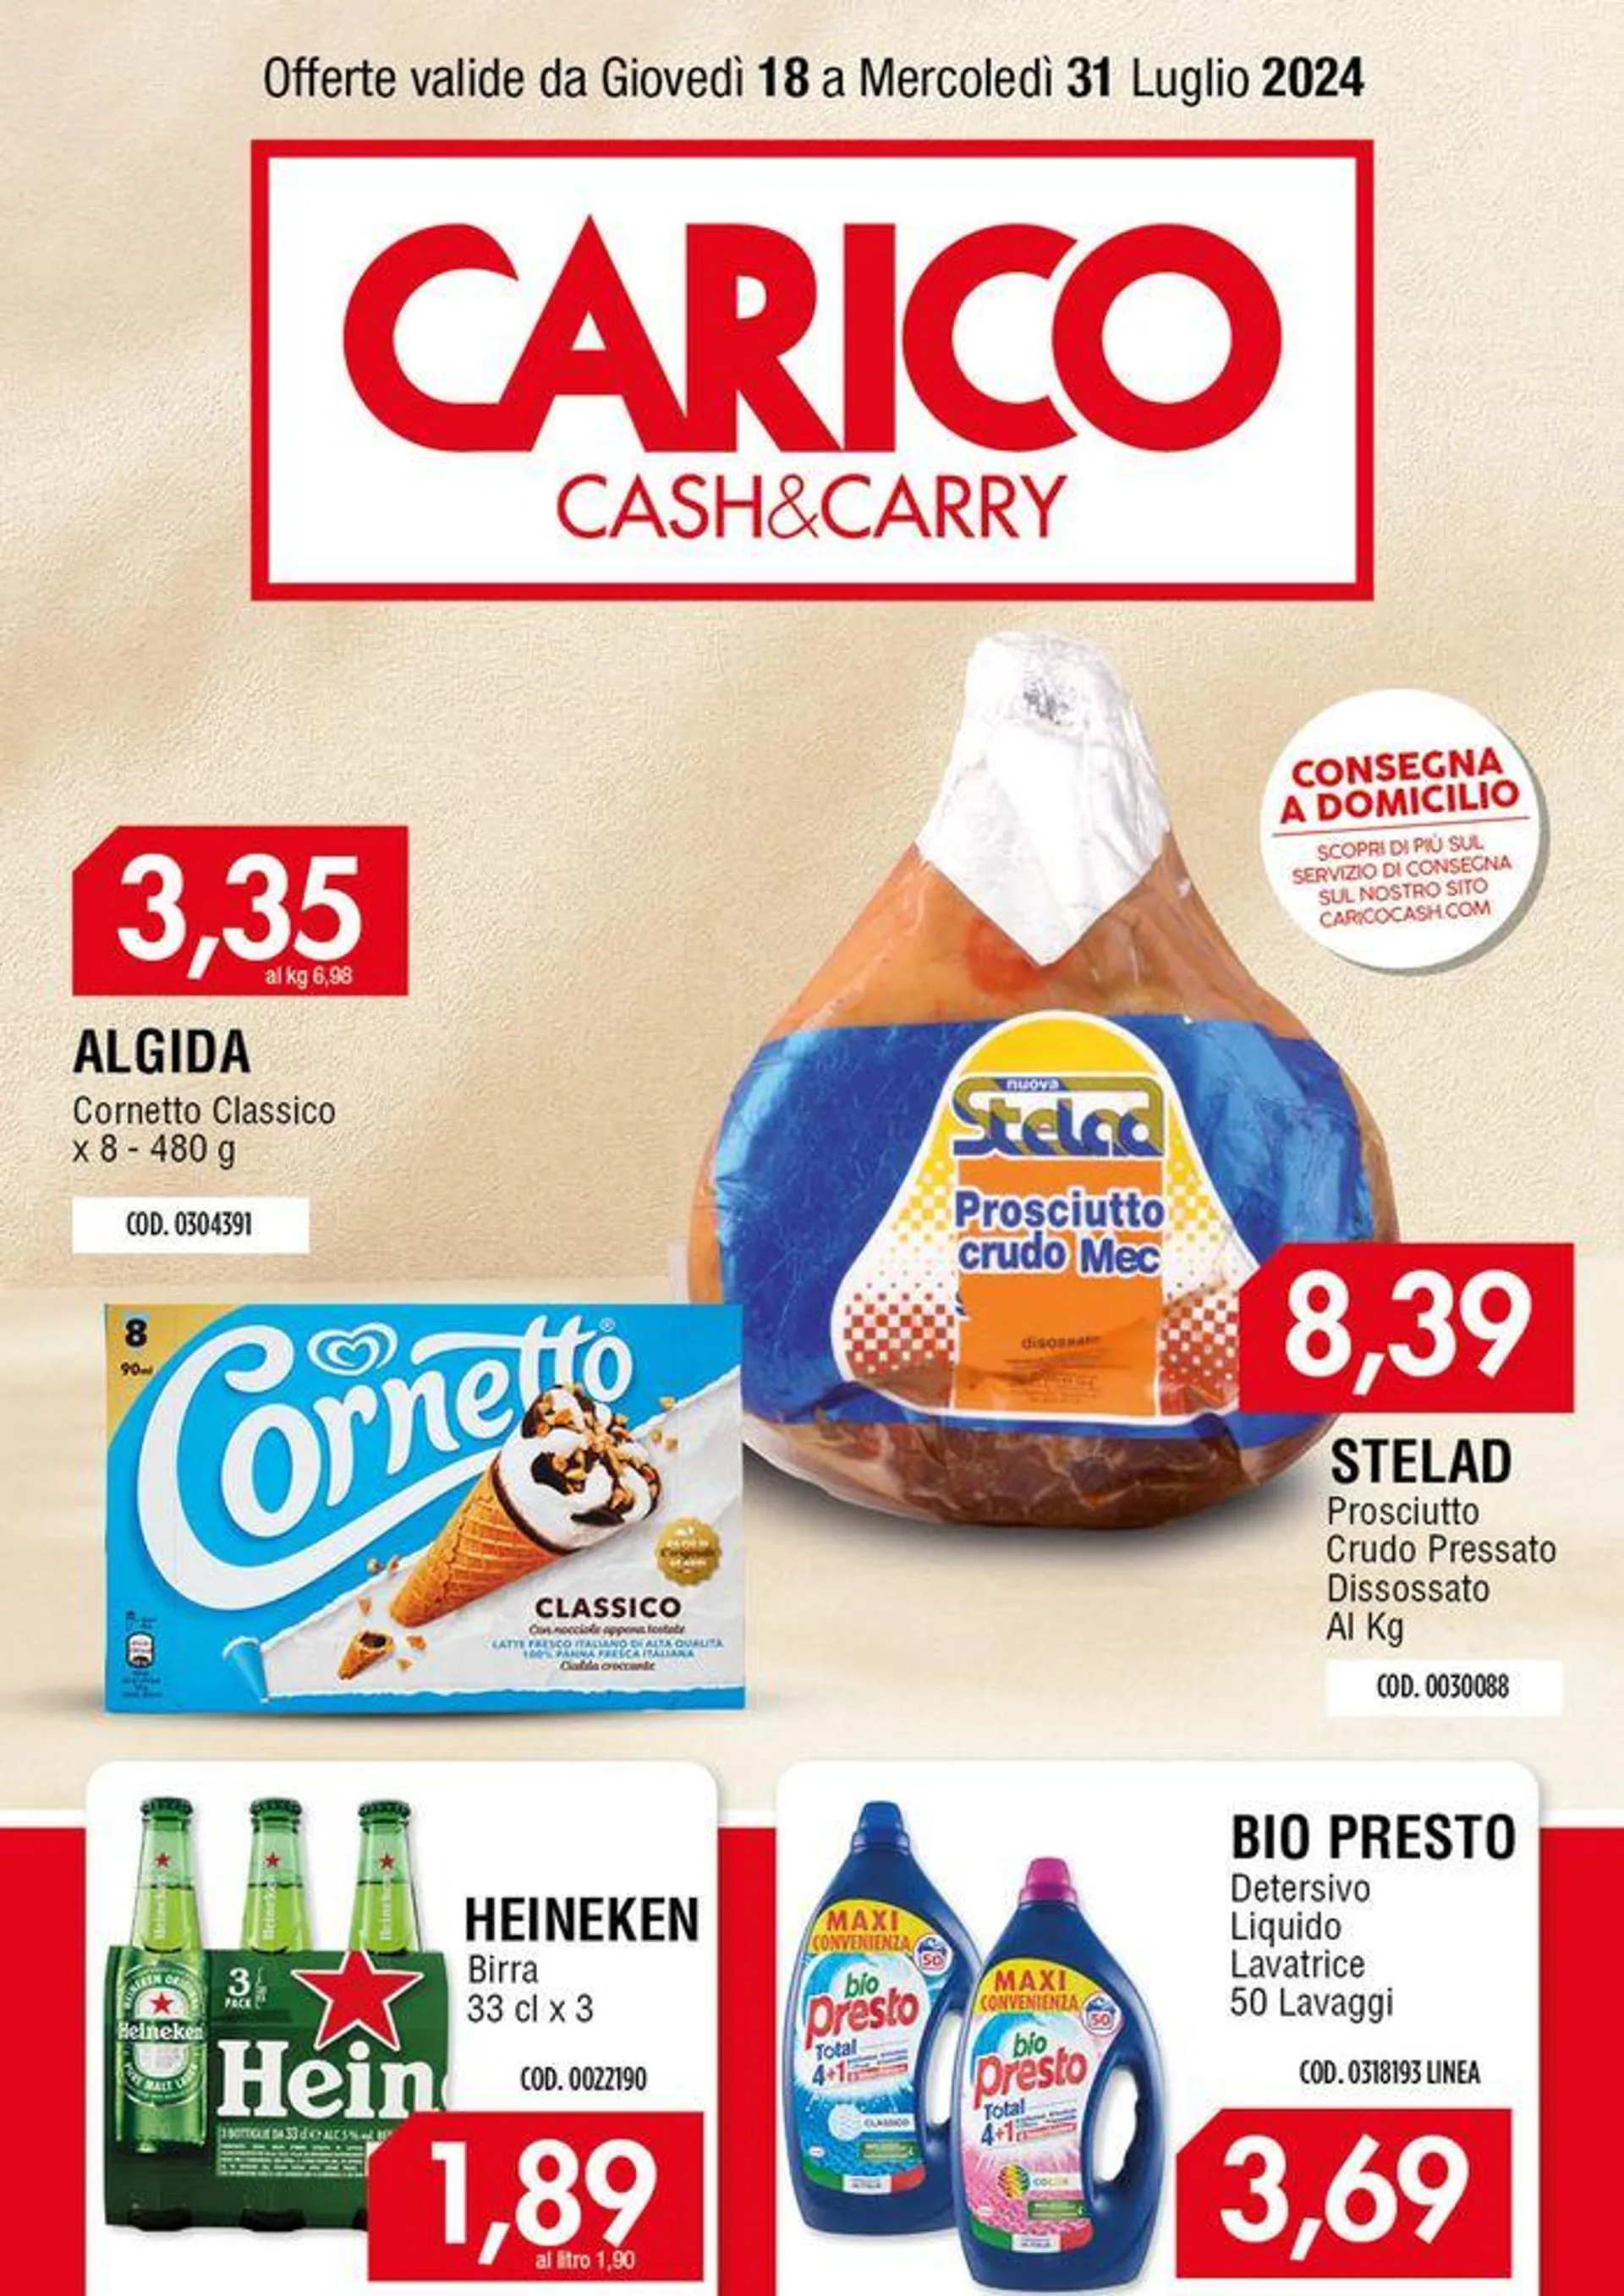 Carico Cash & Carry  - 1